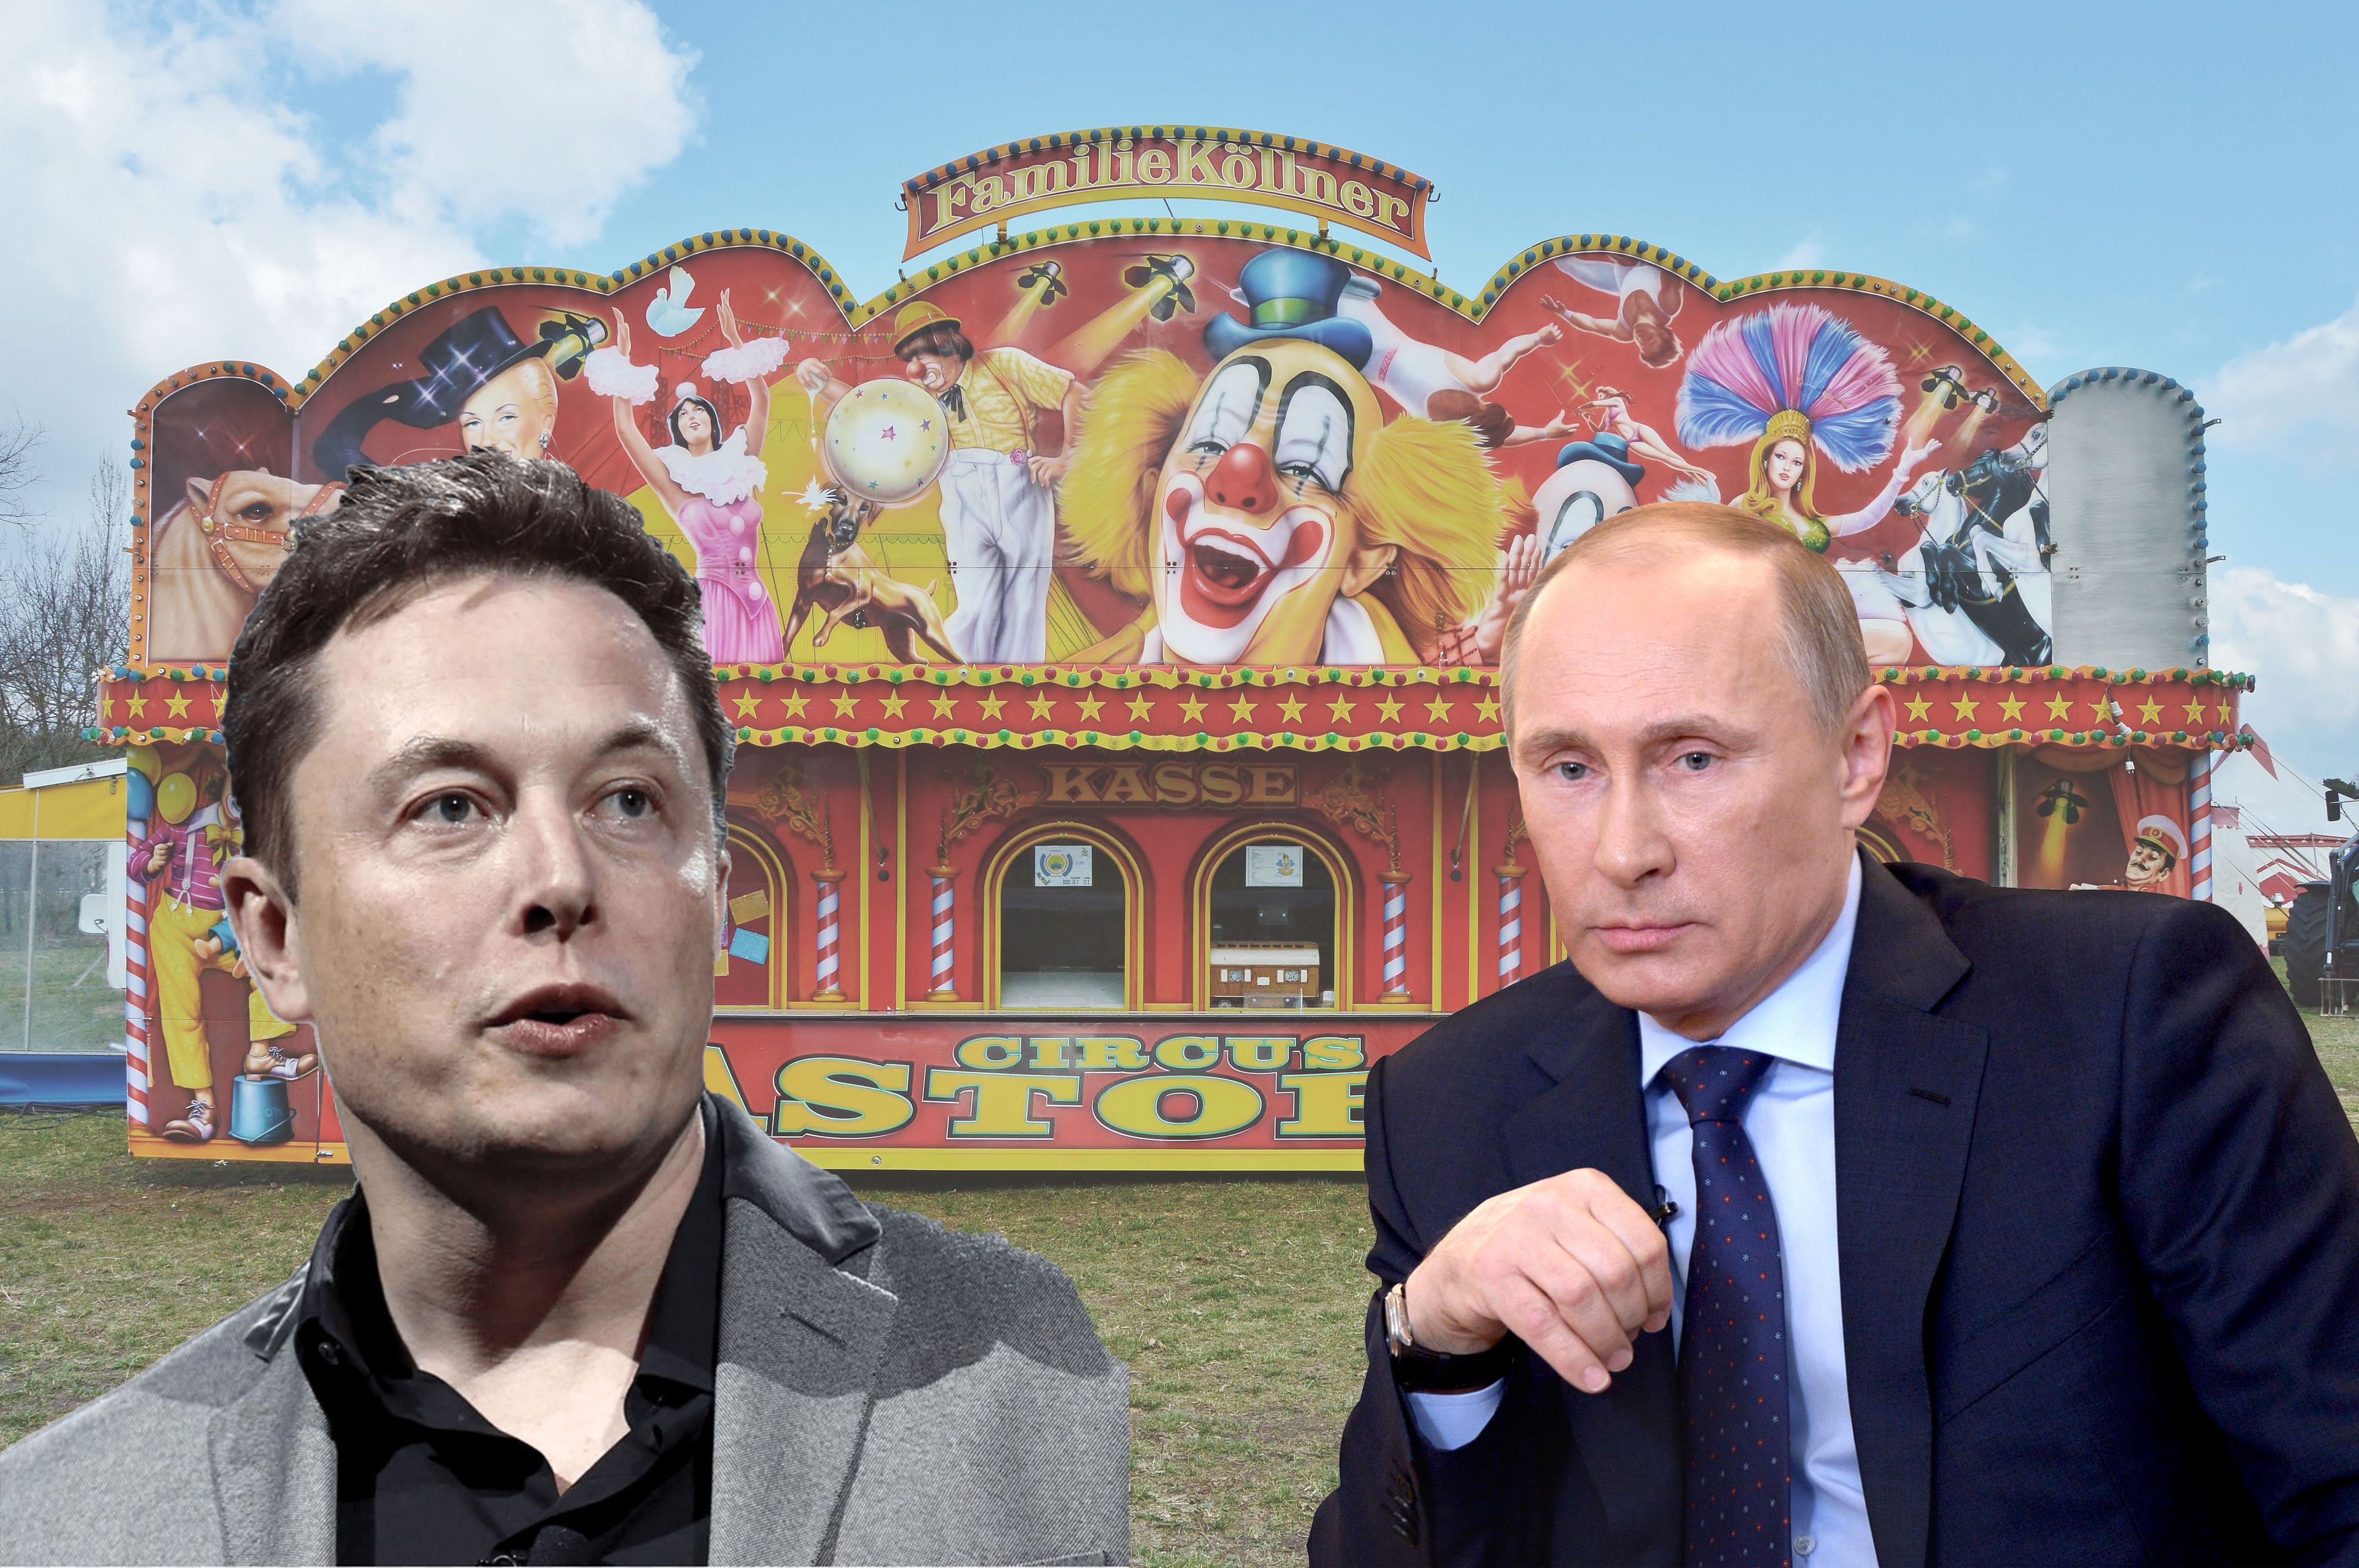 Elon Musk vs Putin